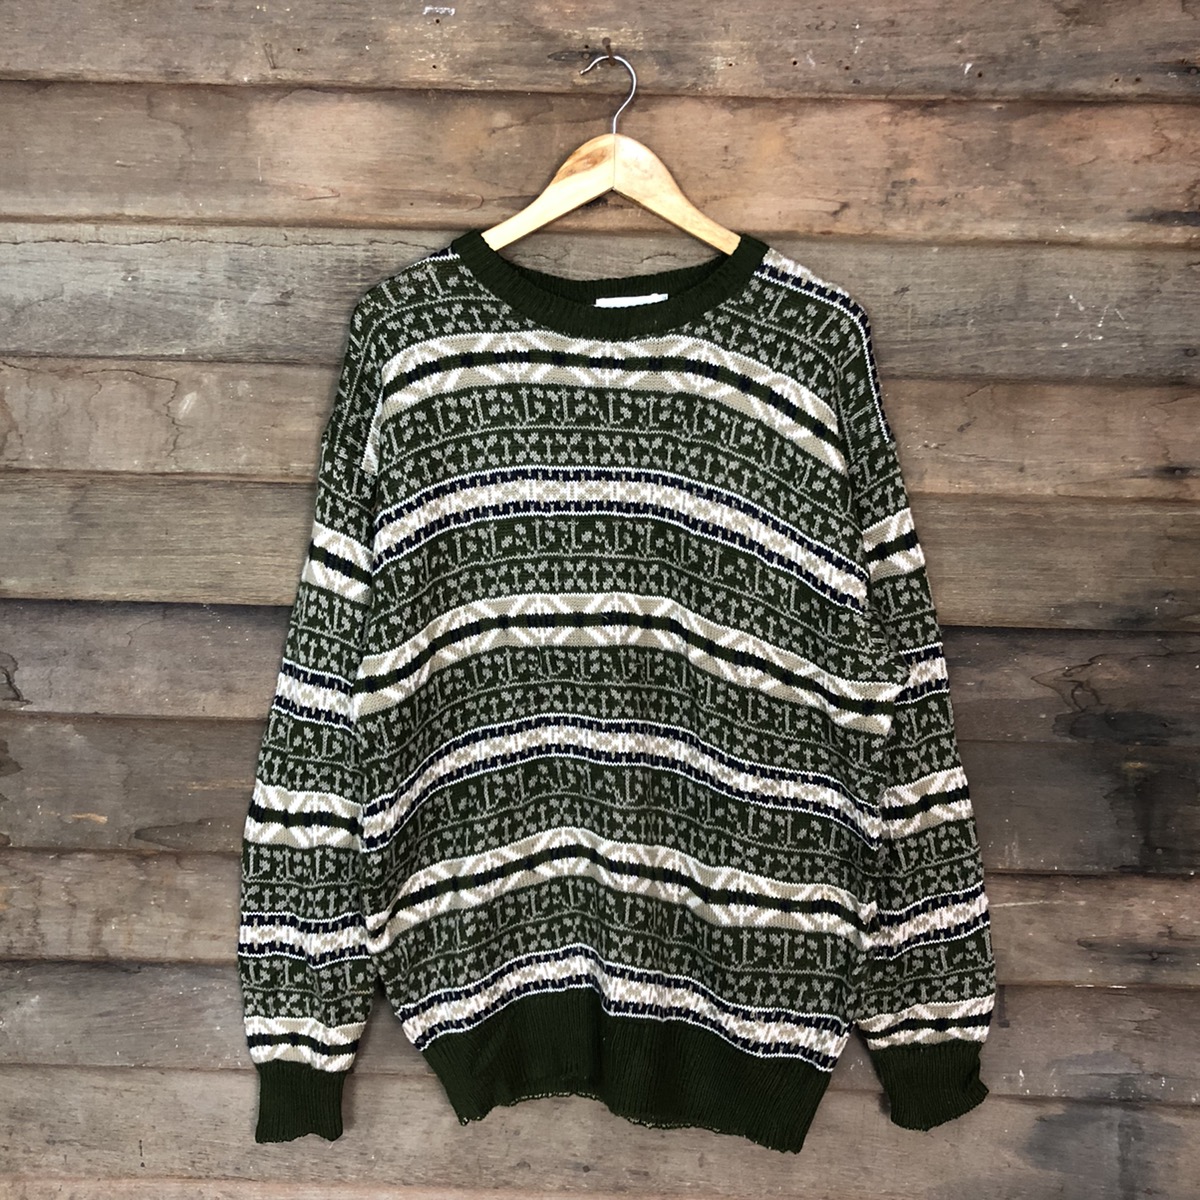 Homespun Knitwear - Yes Pleeze Patterned Knit Sweater - 3